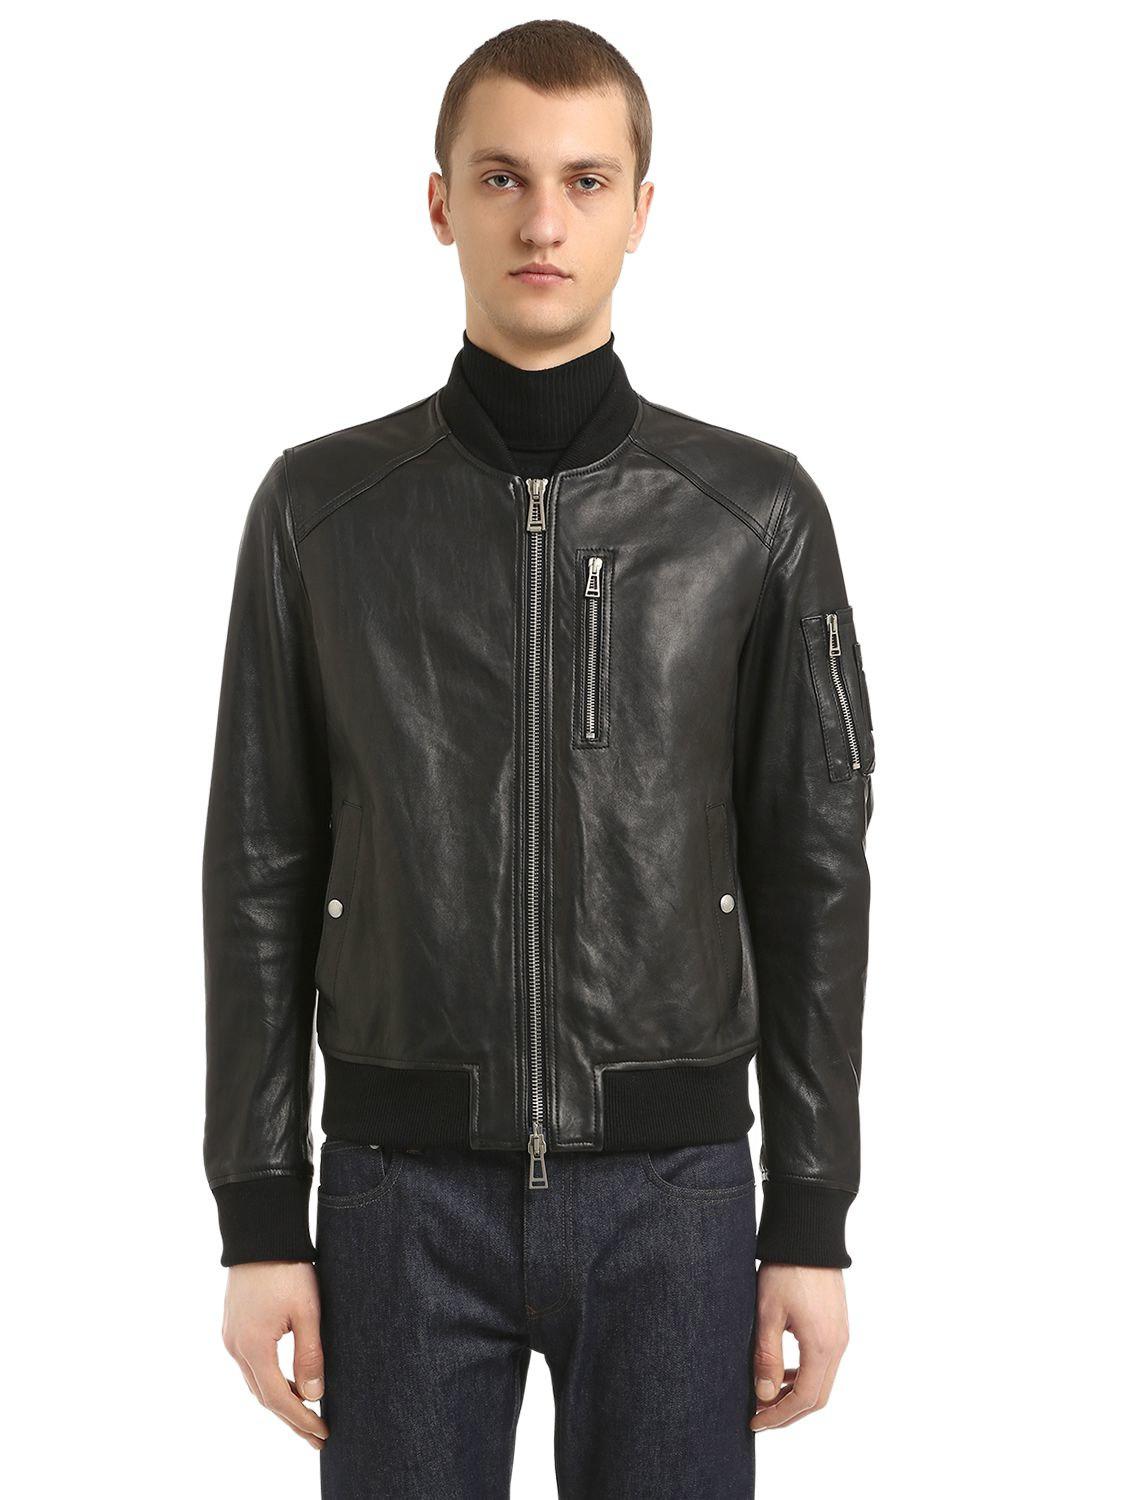 Belstaff Clenshaw Leather Bomber Jacket in Black for Men - Lyst